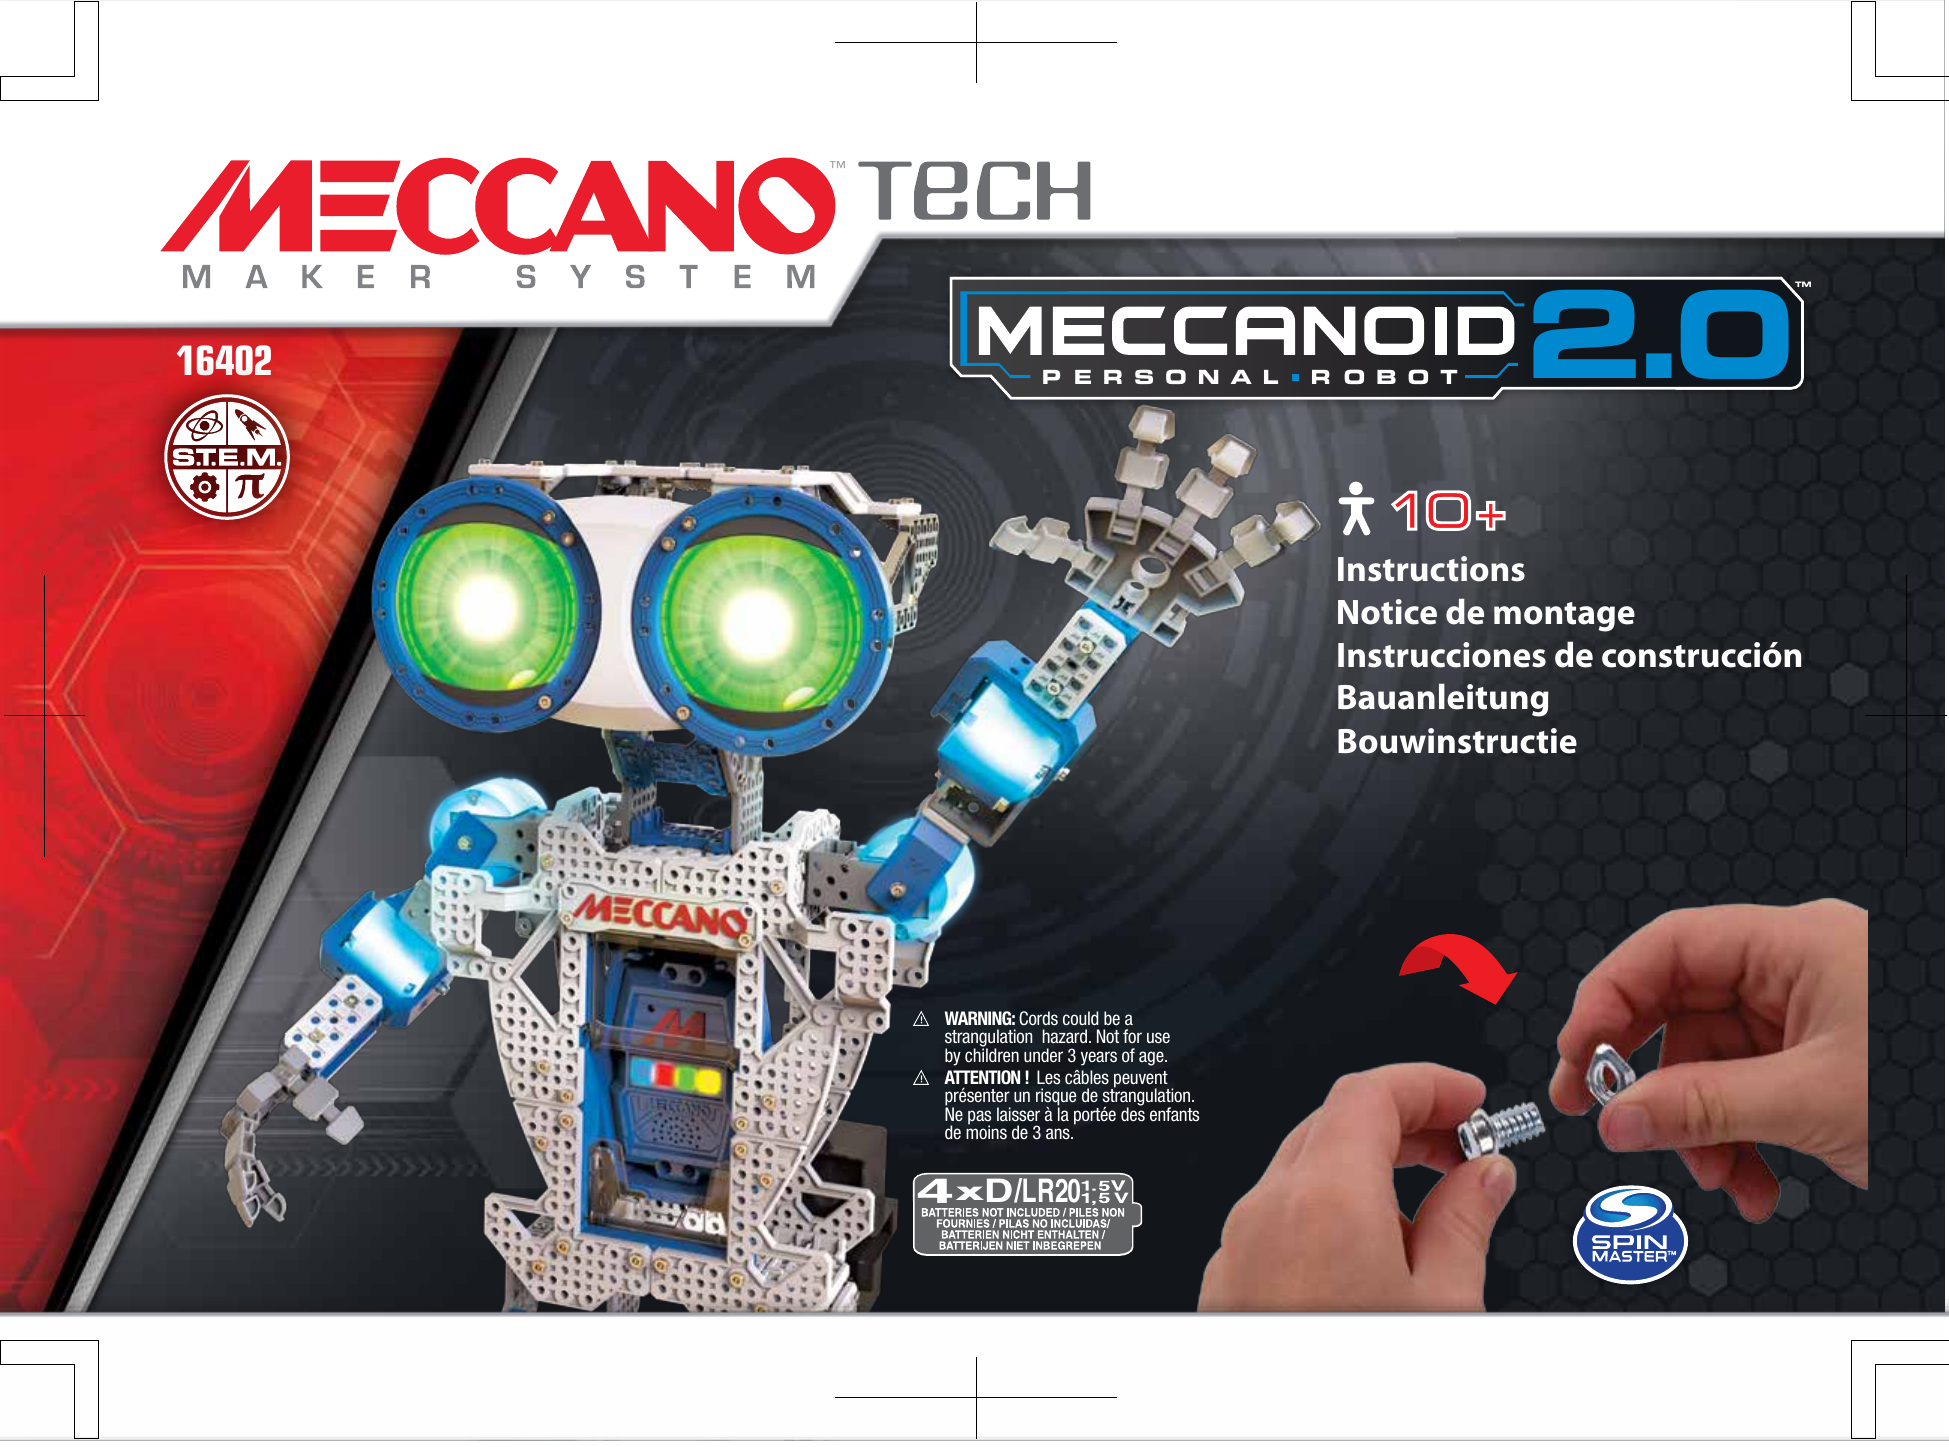 M 201 Meccano Meccanoid G15 Personal Robot Part 